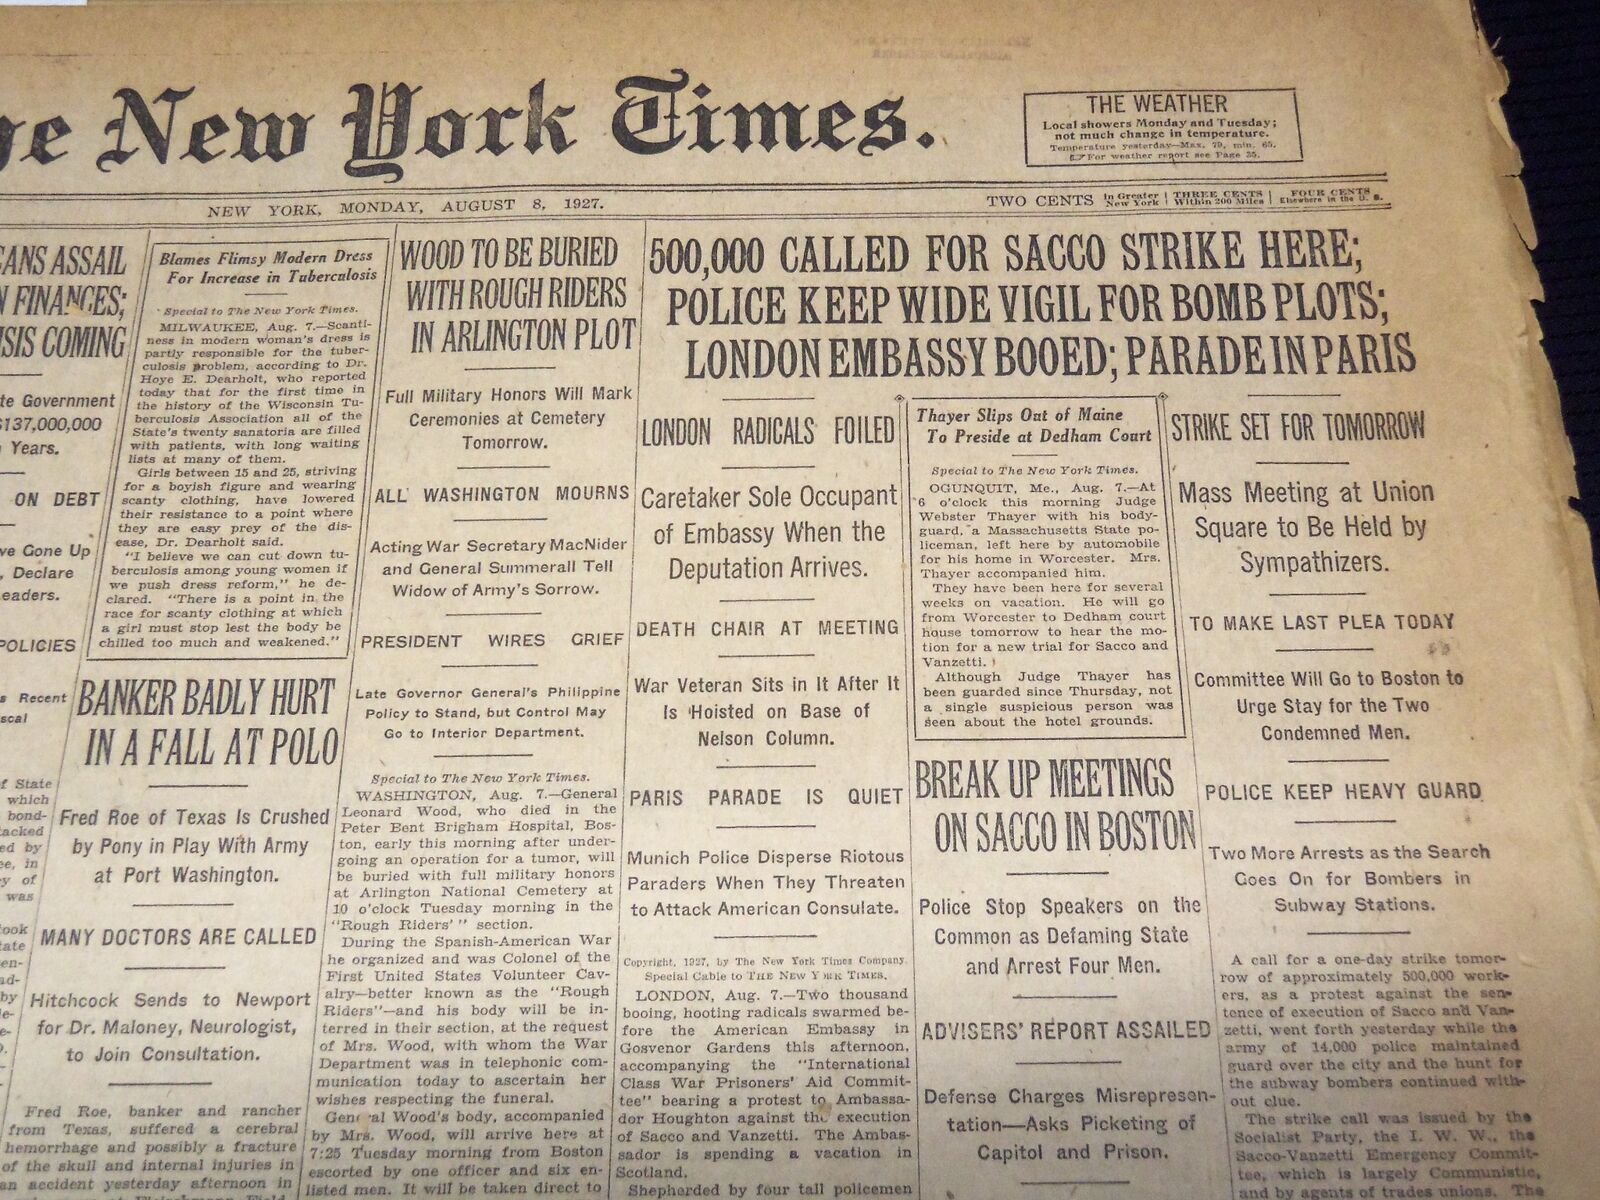 1927 AUGUST 8 NEW YORK TIMES - SACCO STRIKE HERE - RONARD WOOD DEAD - NT 9562